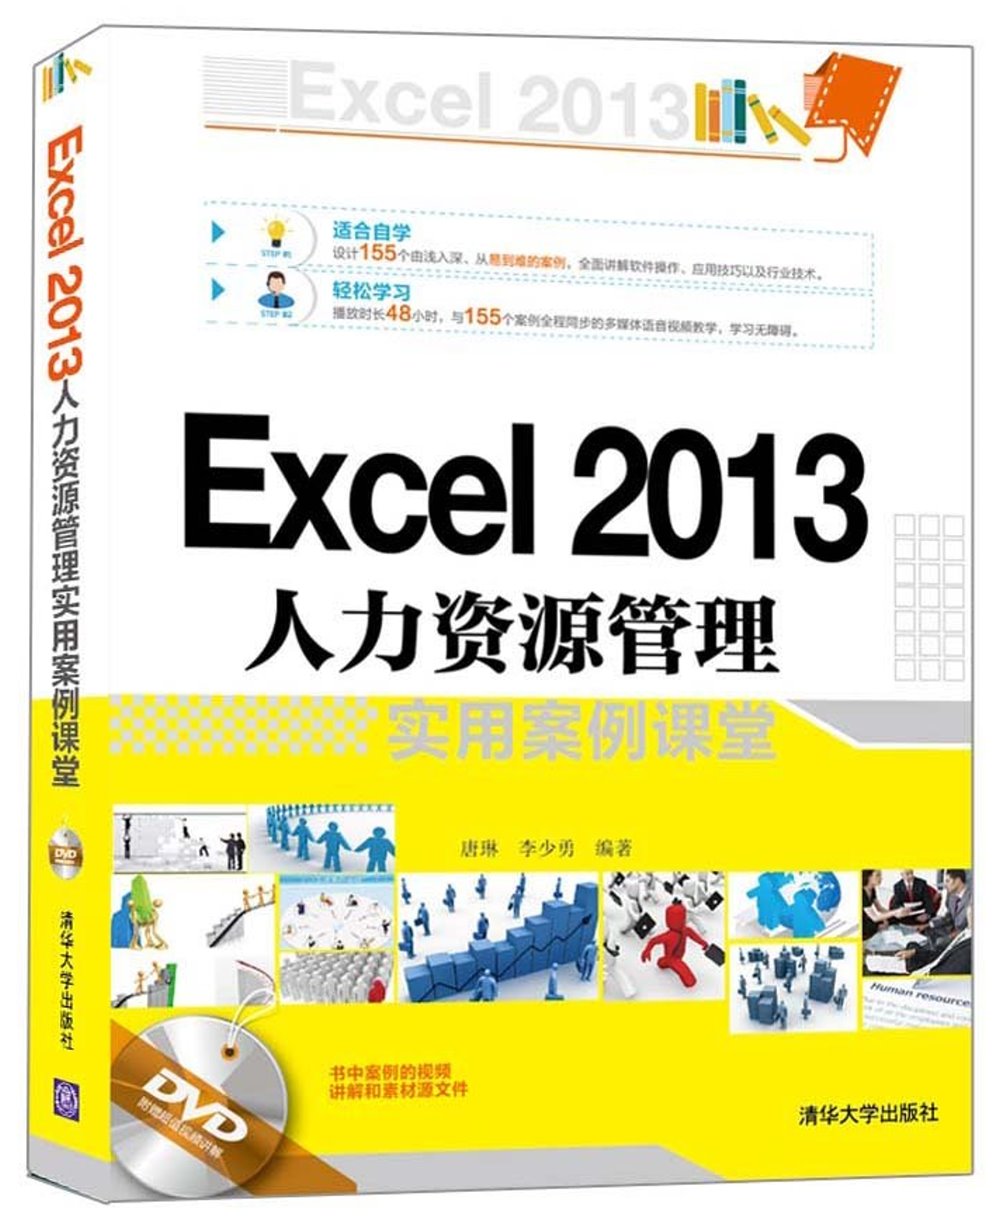 Excel 2013人力資源管理實用案例課堂